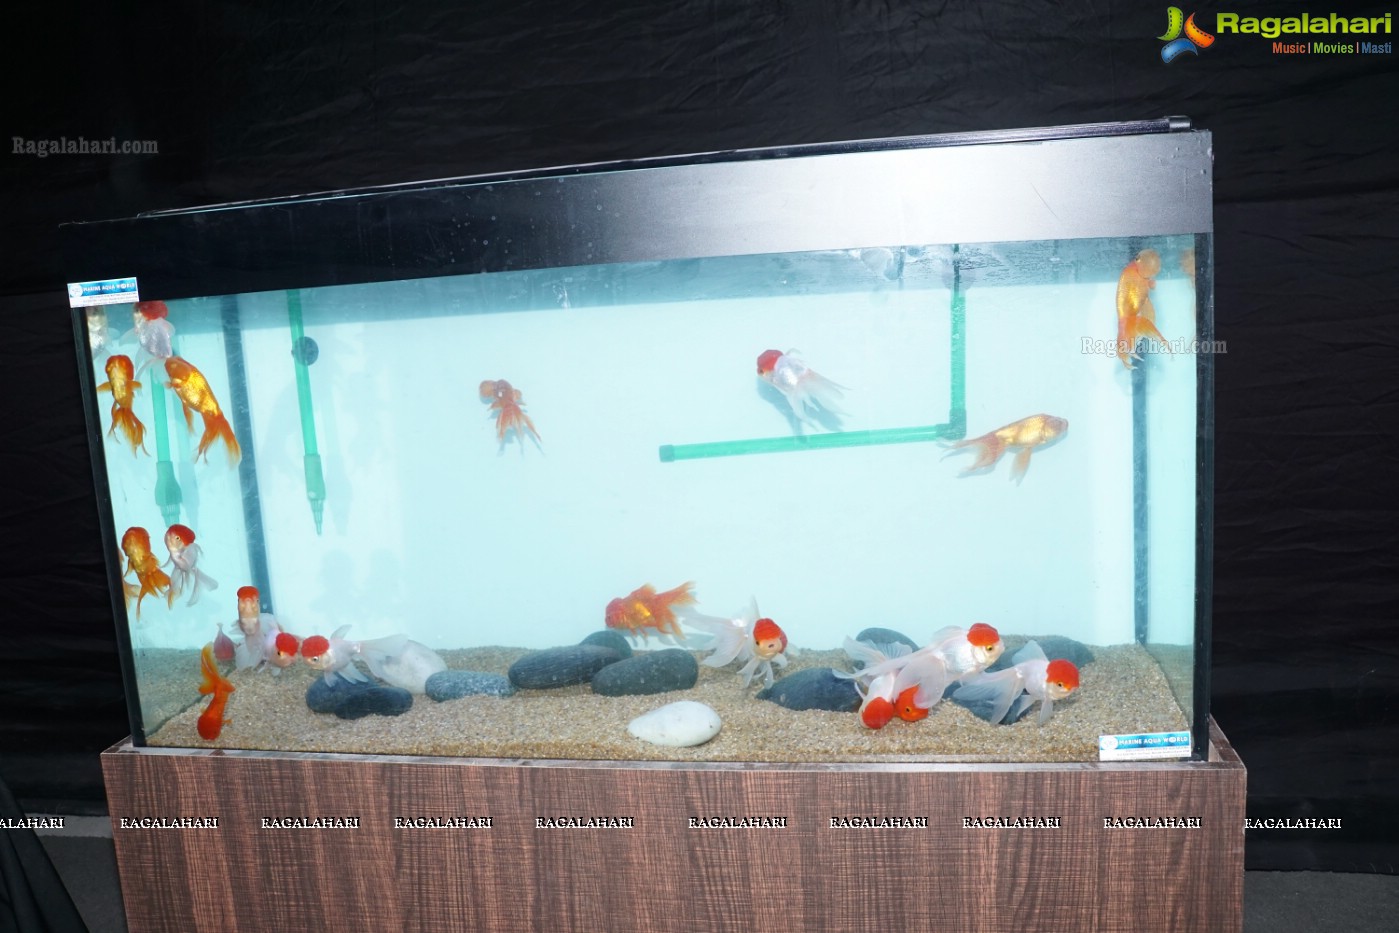 Aqua Life 2015 - Rare Species of Fish Exhibition